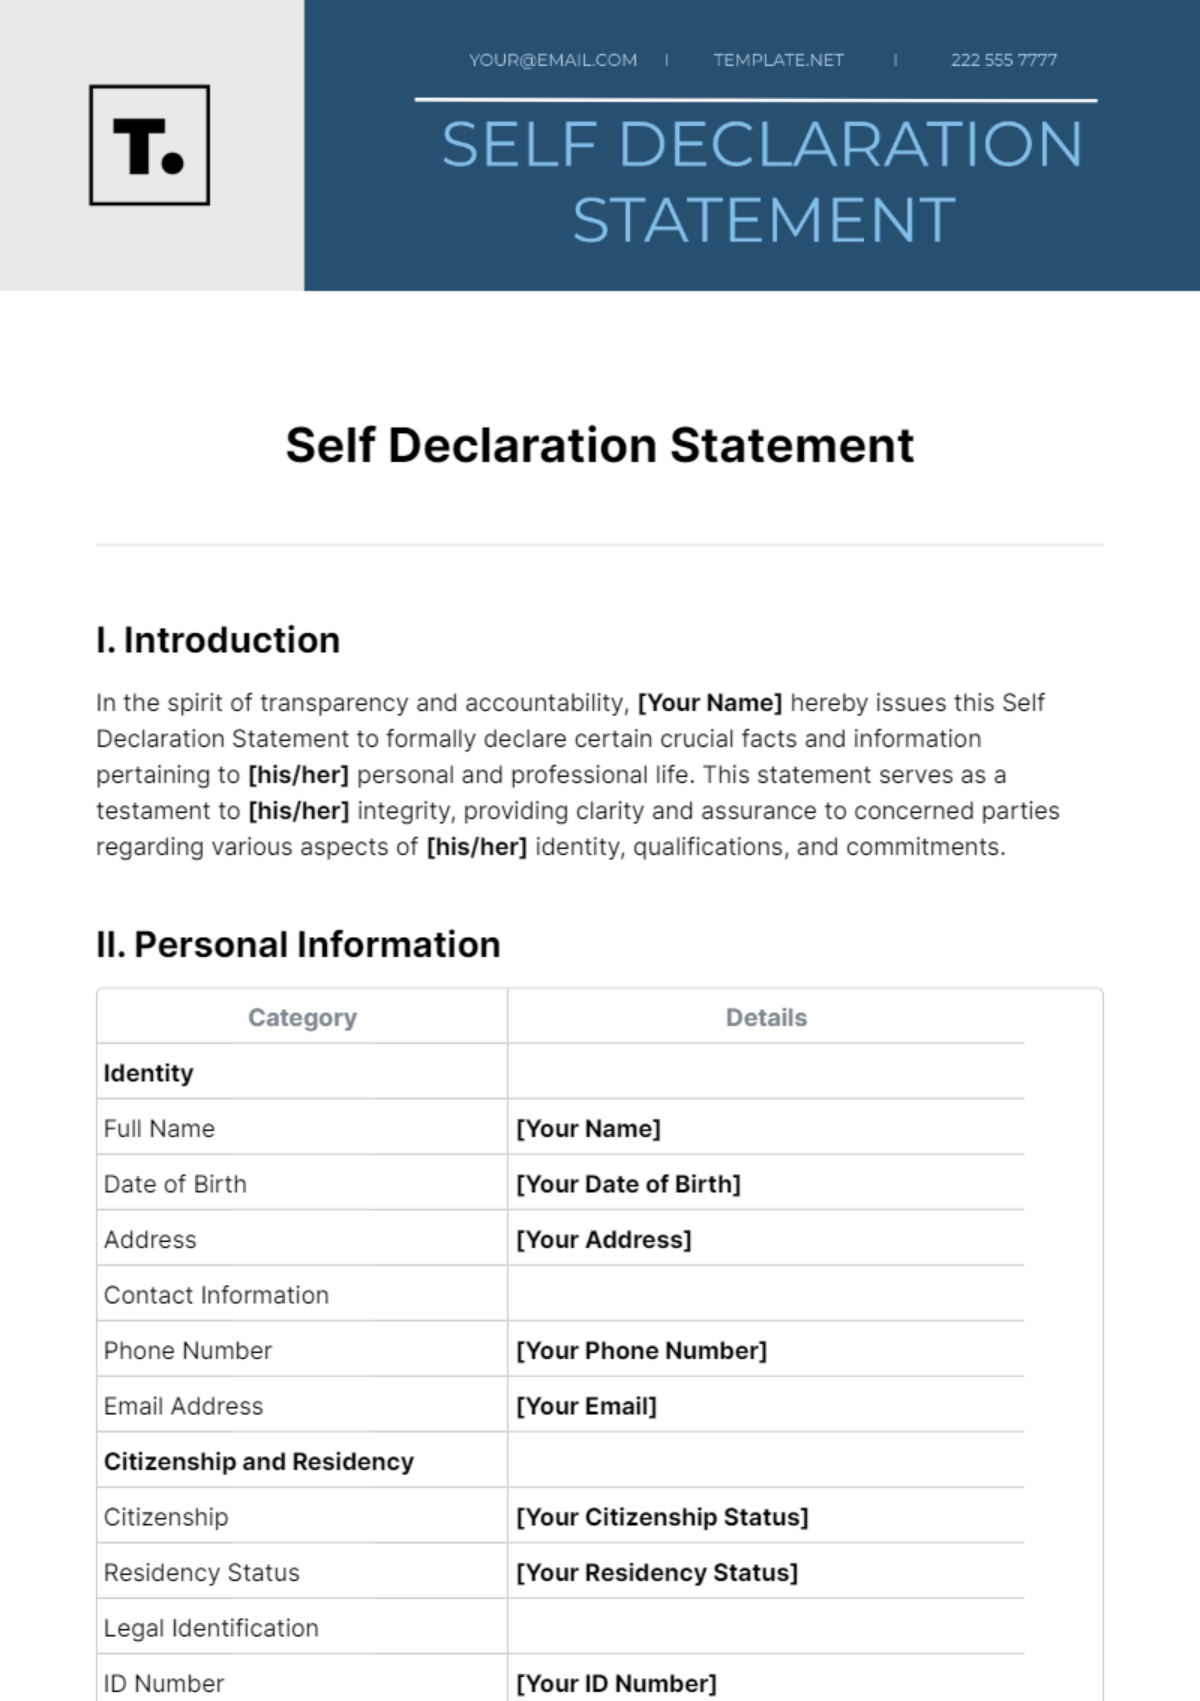 Self Declaration Statement Template